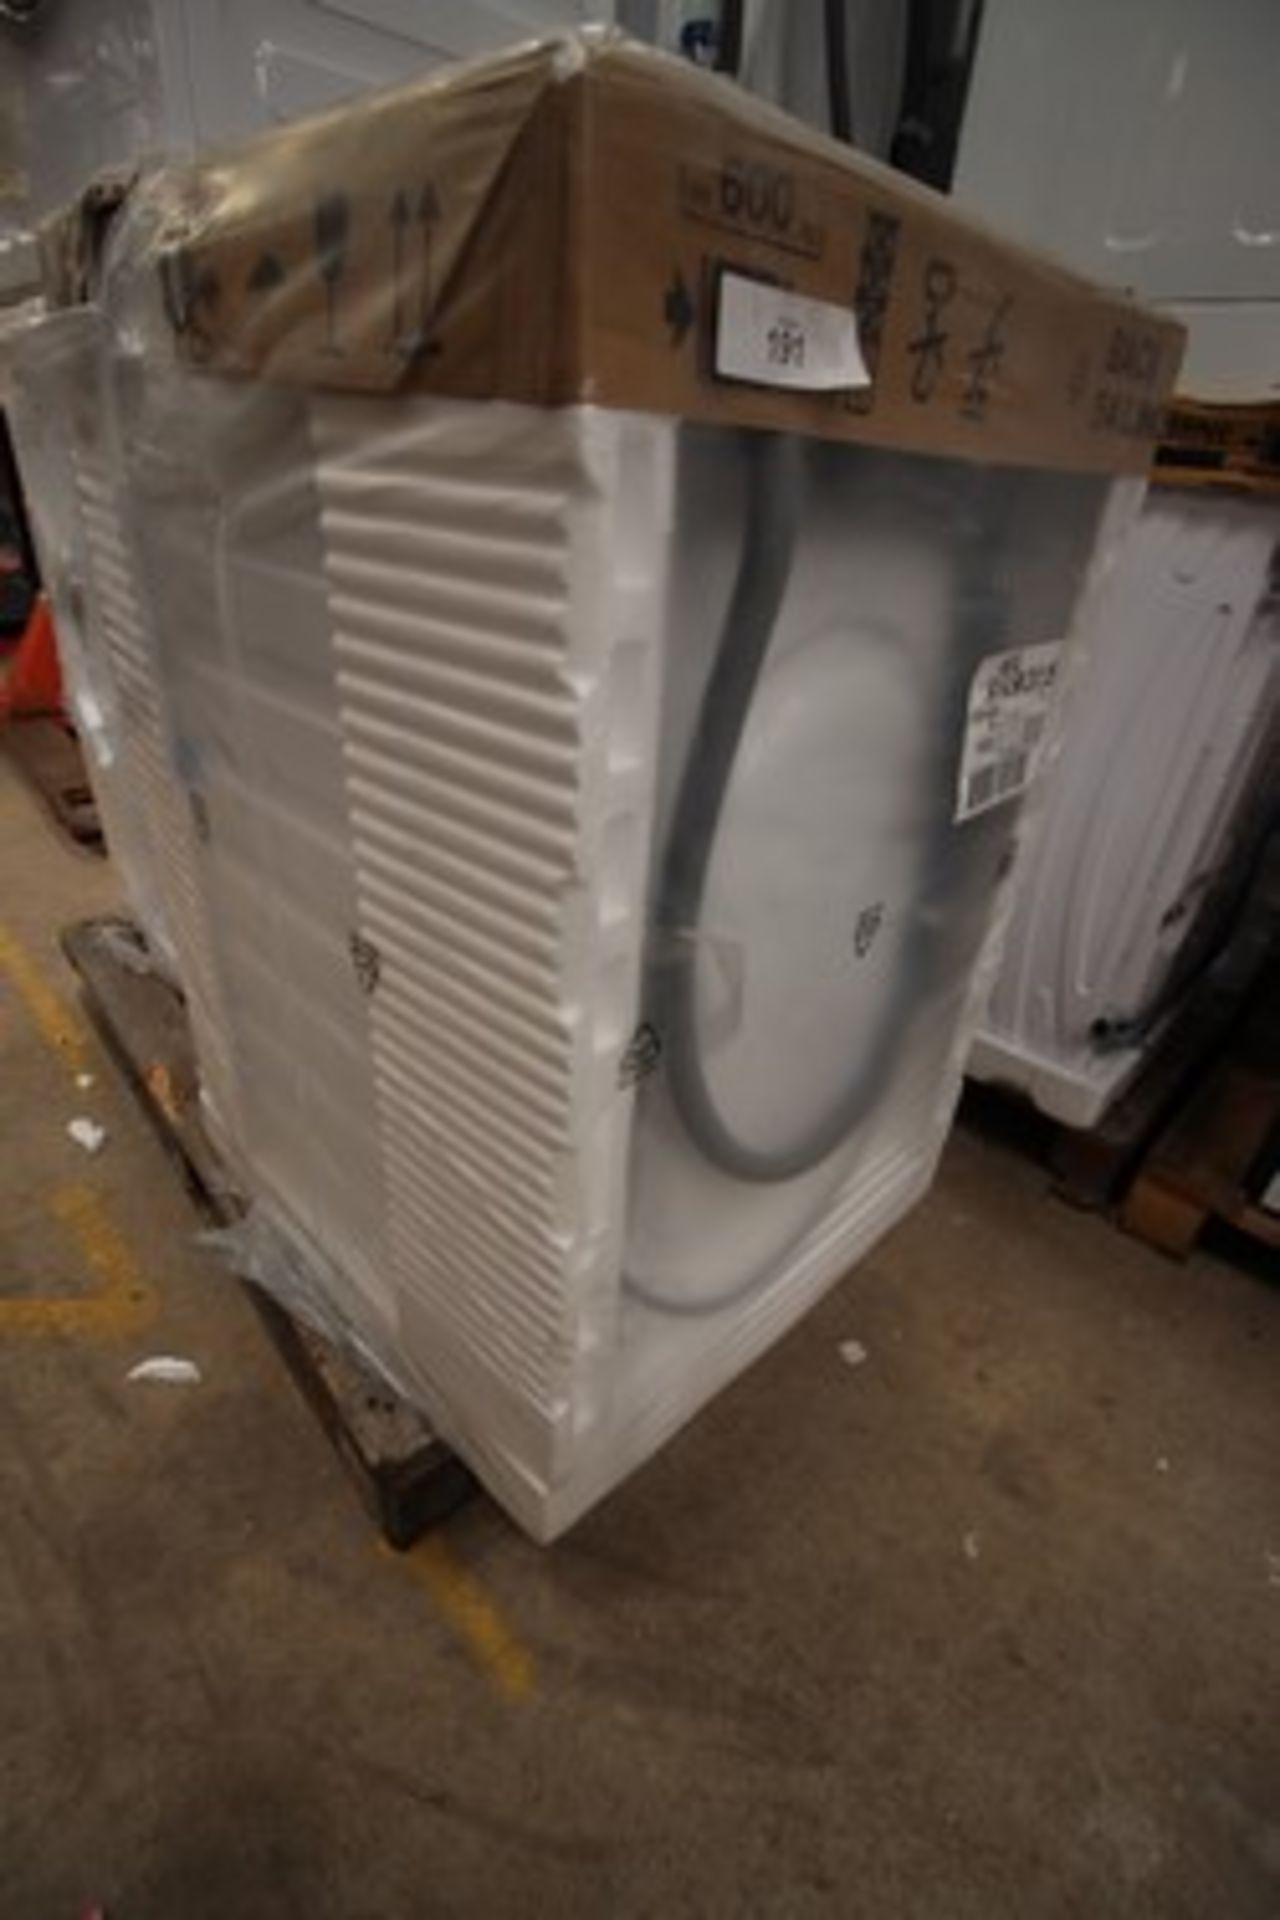 1 x AEG 8kg washing machine, Model 914913125 - New in pack (eBay 9) - Image 2 of 4